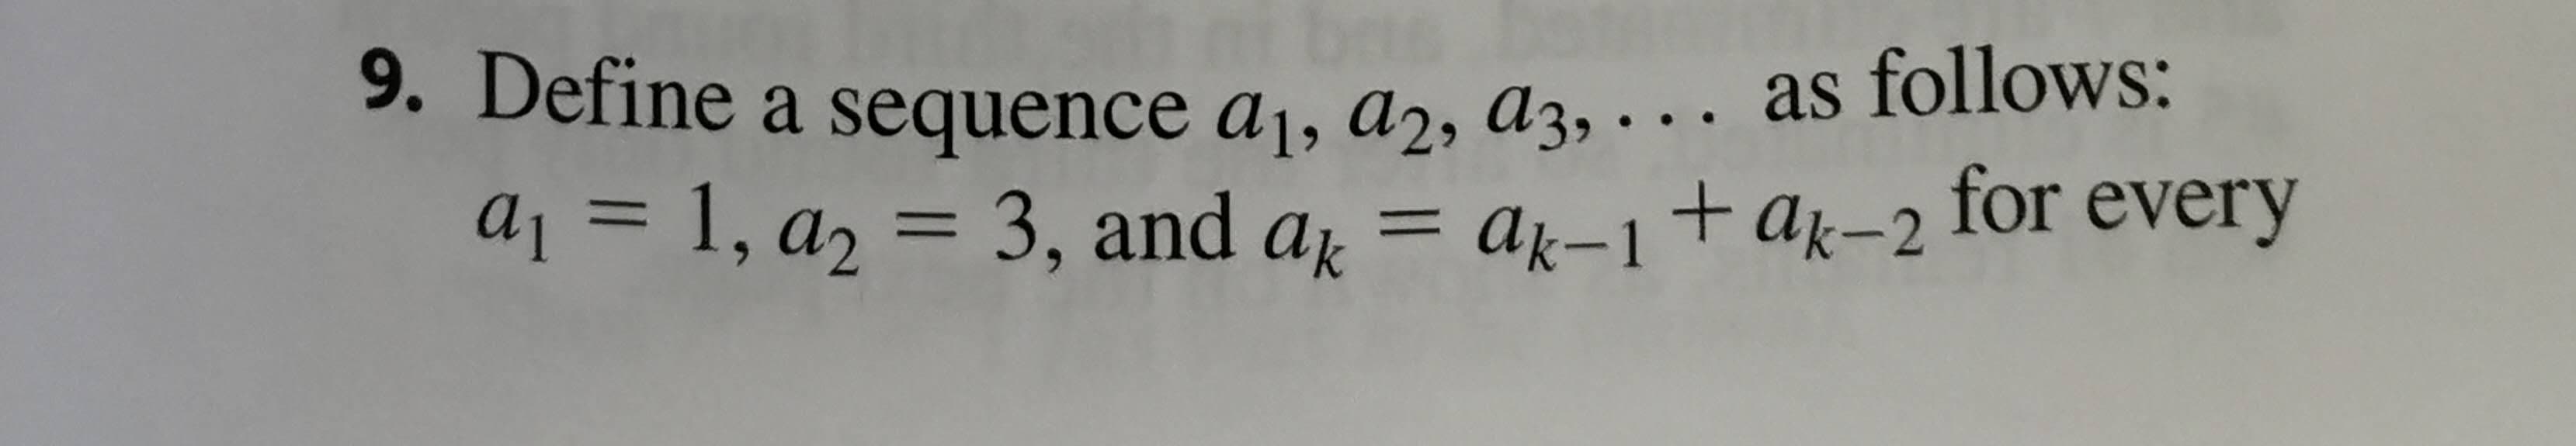 9. Define a sequence a1, a2, a3, . . . as follows:
a1 = 1, a2 = 3, and a =
ak-1+ak-2 for every
%D
%3D
